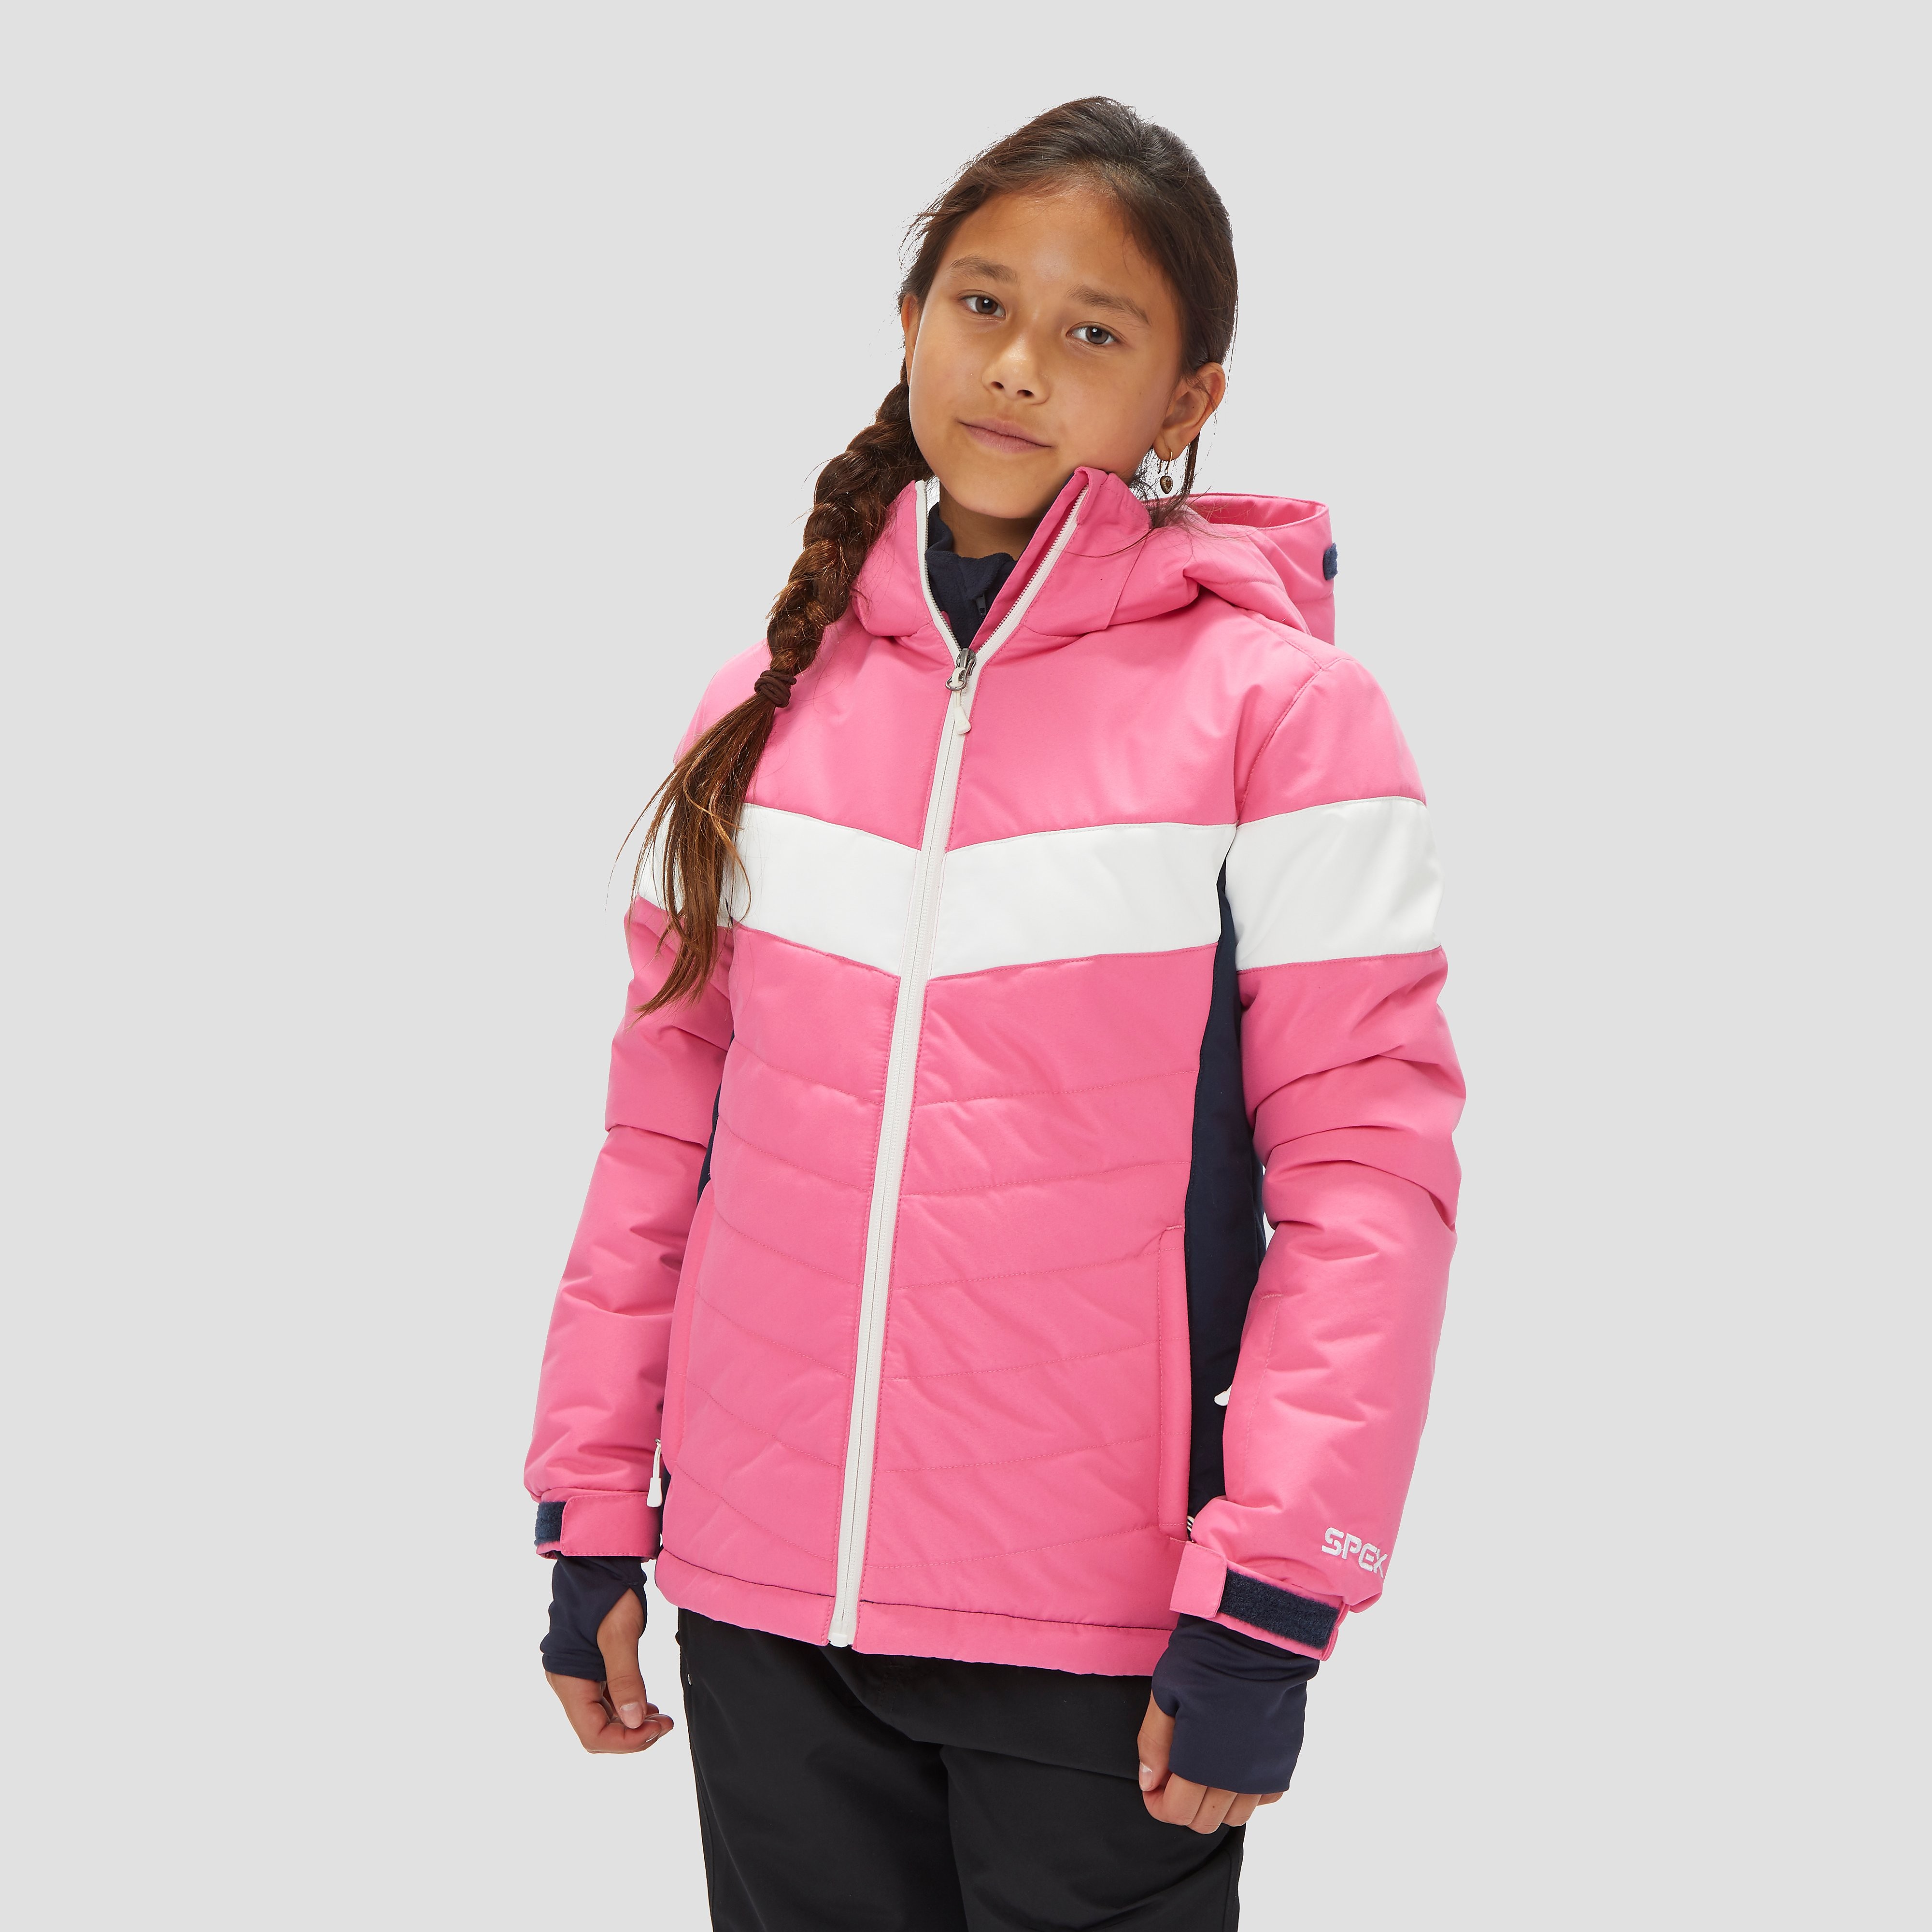 Spex marox ski jas roze kinderen